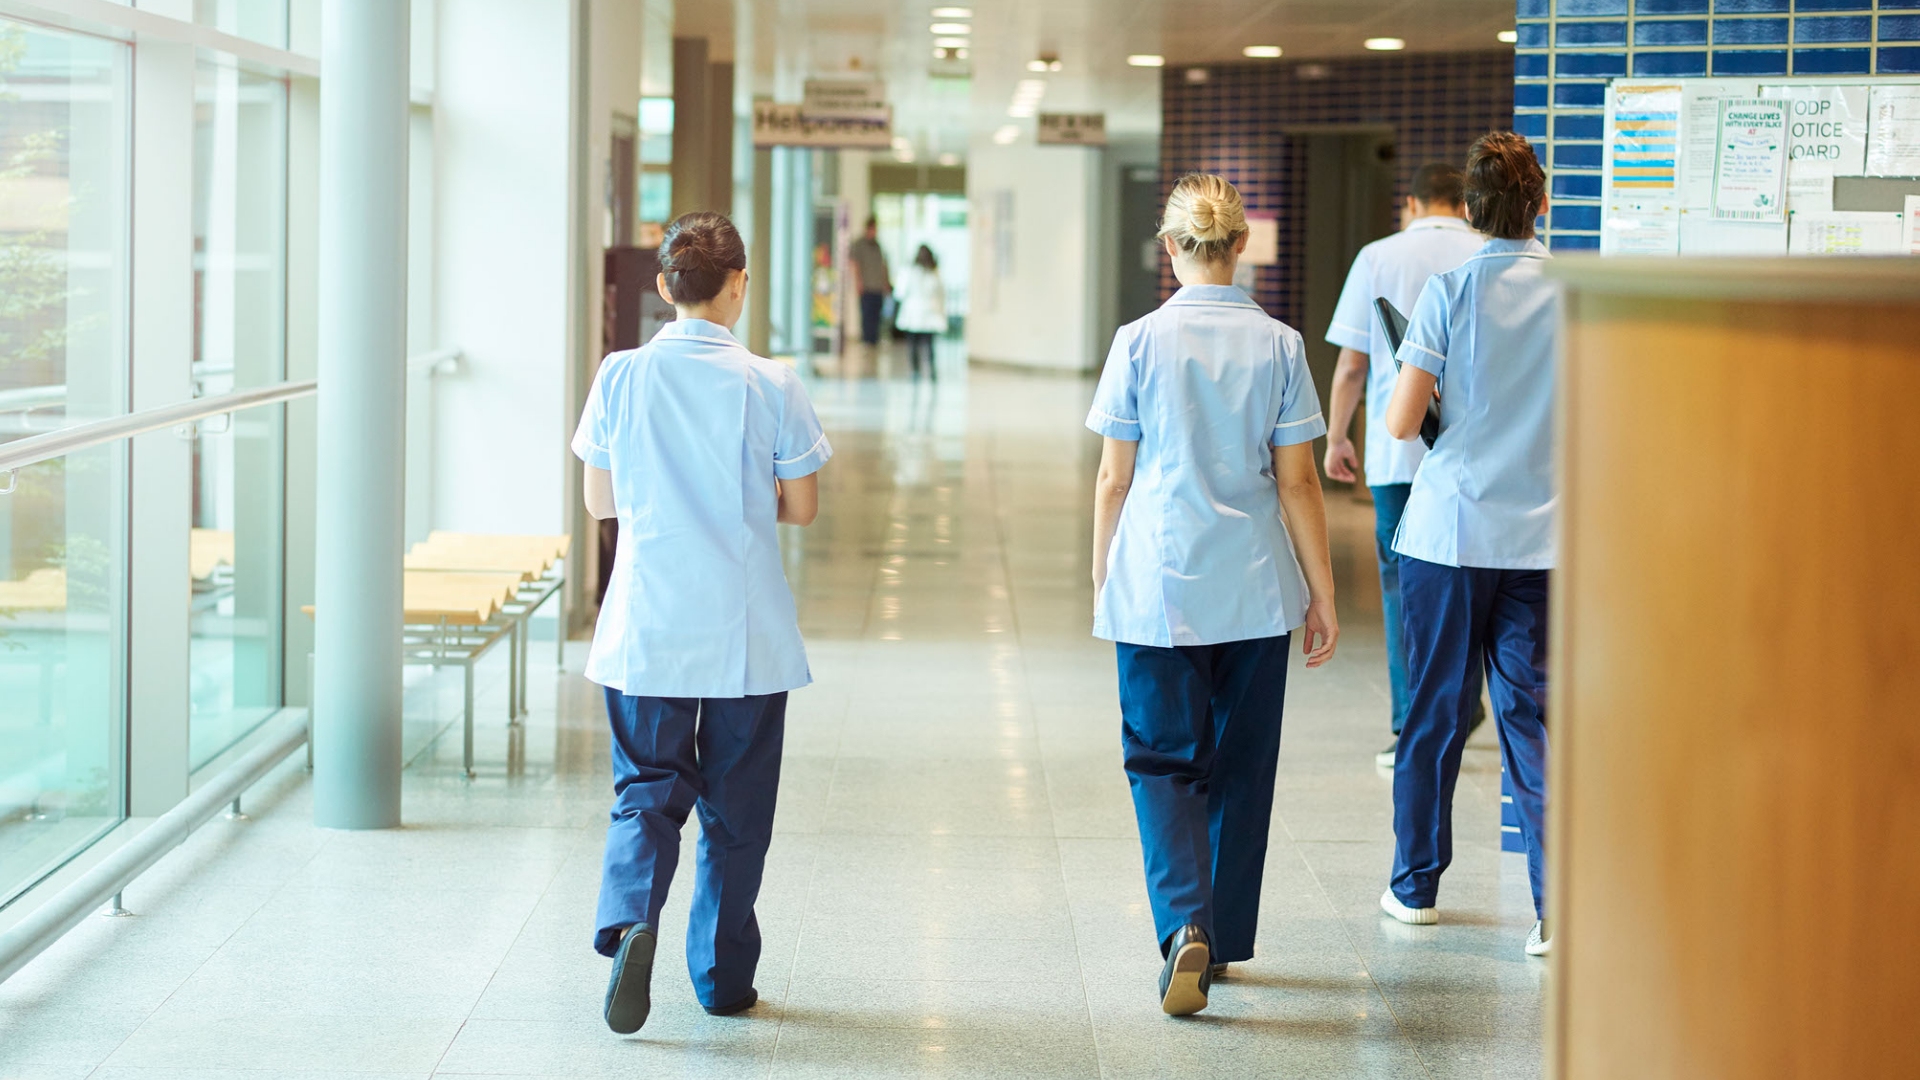 UCAS report a drop in applicants for Scotland's nursing courses